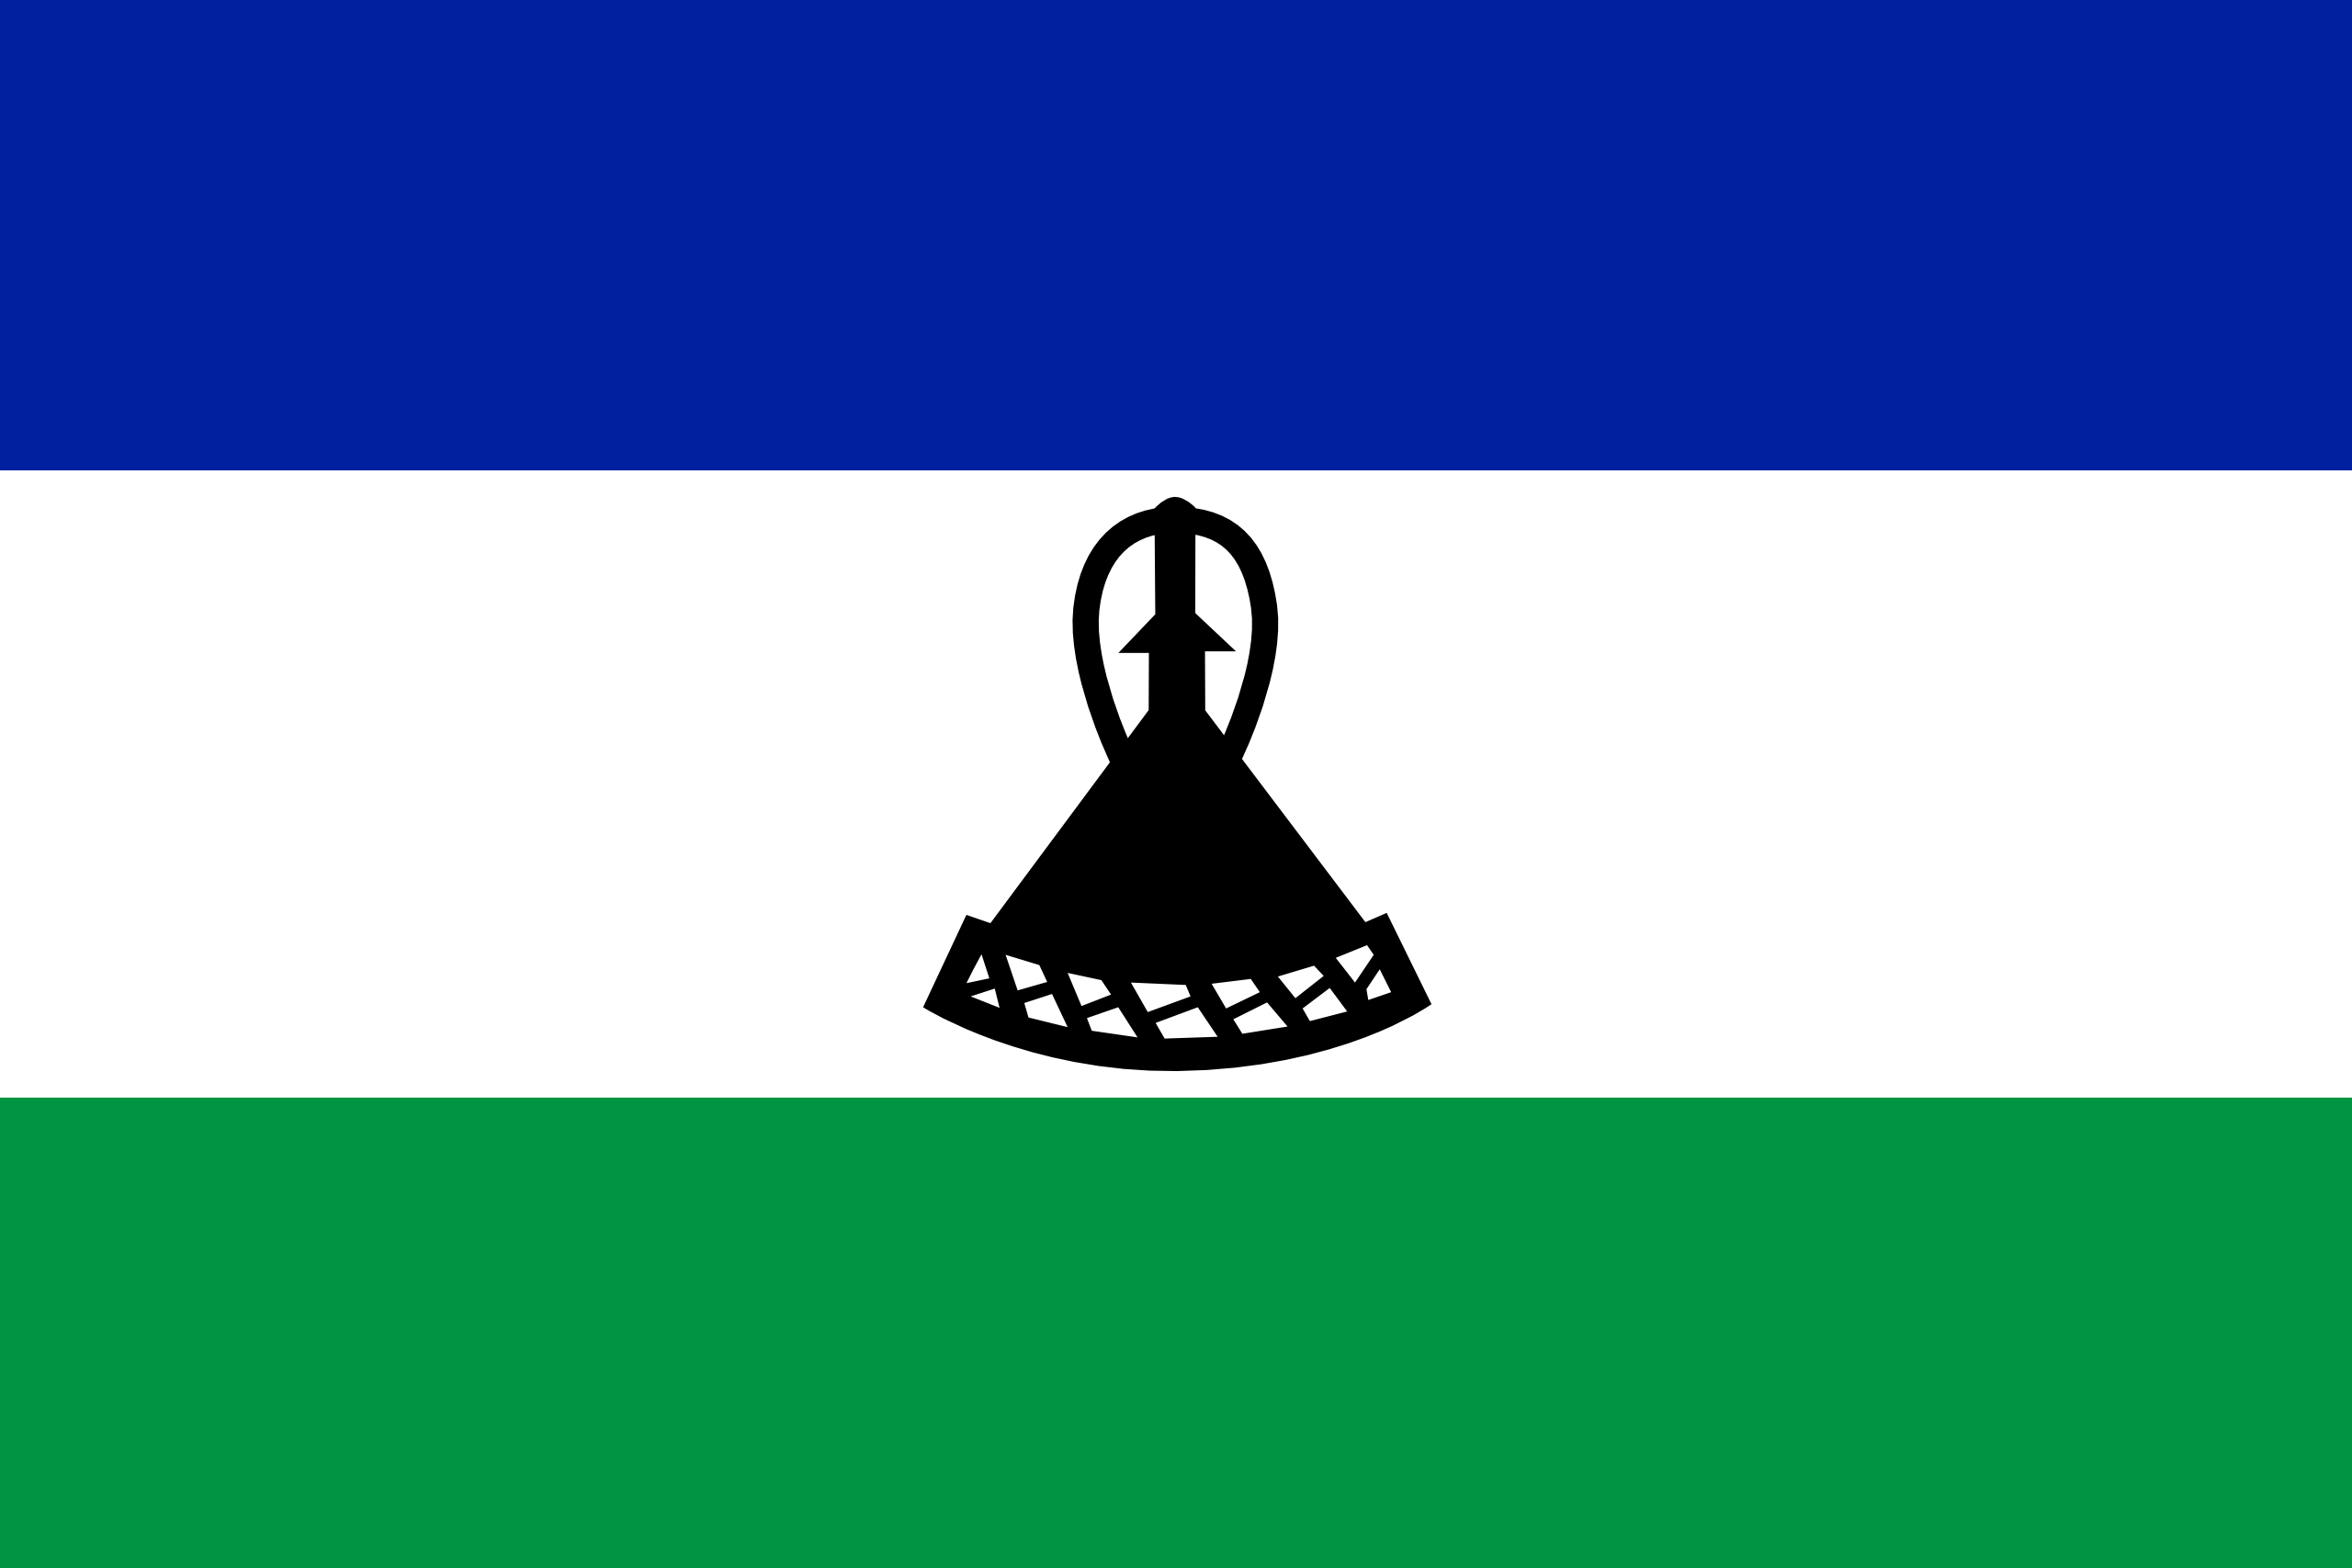 Lesotho's flag